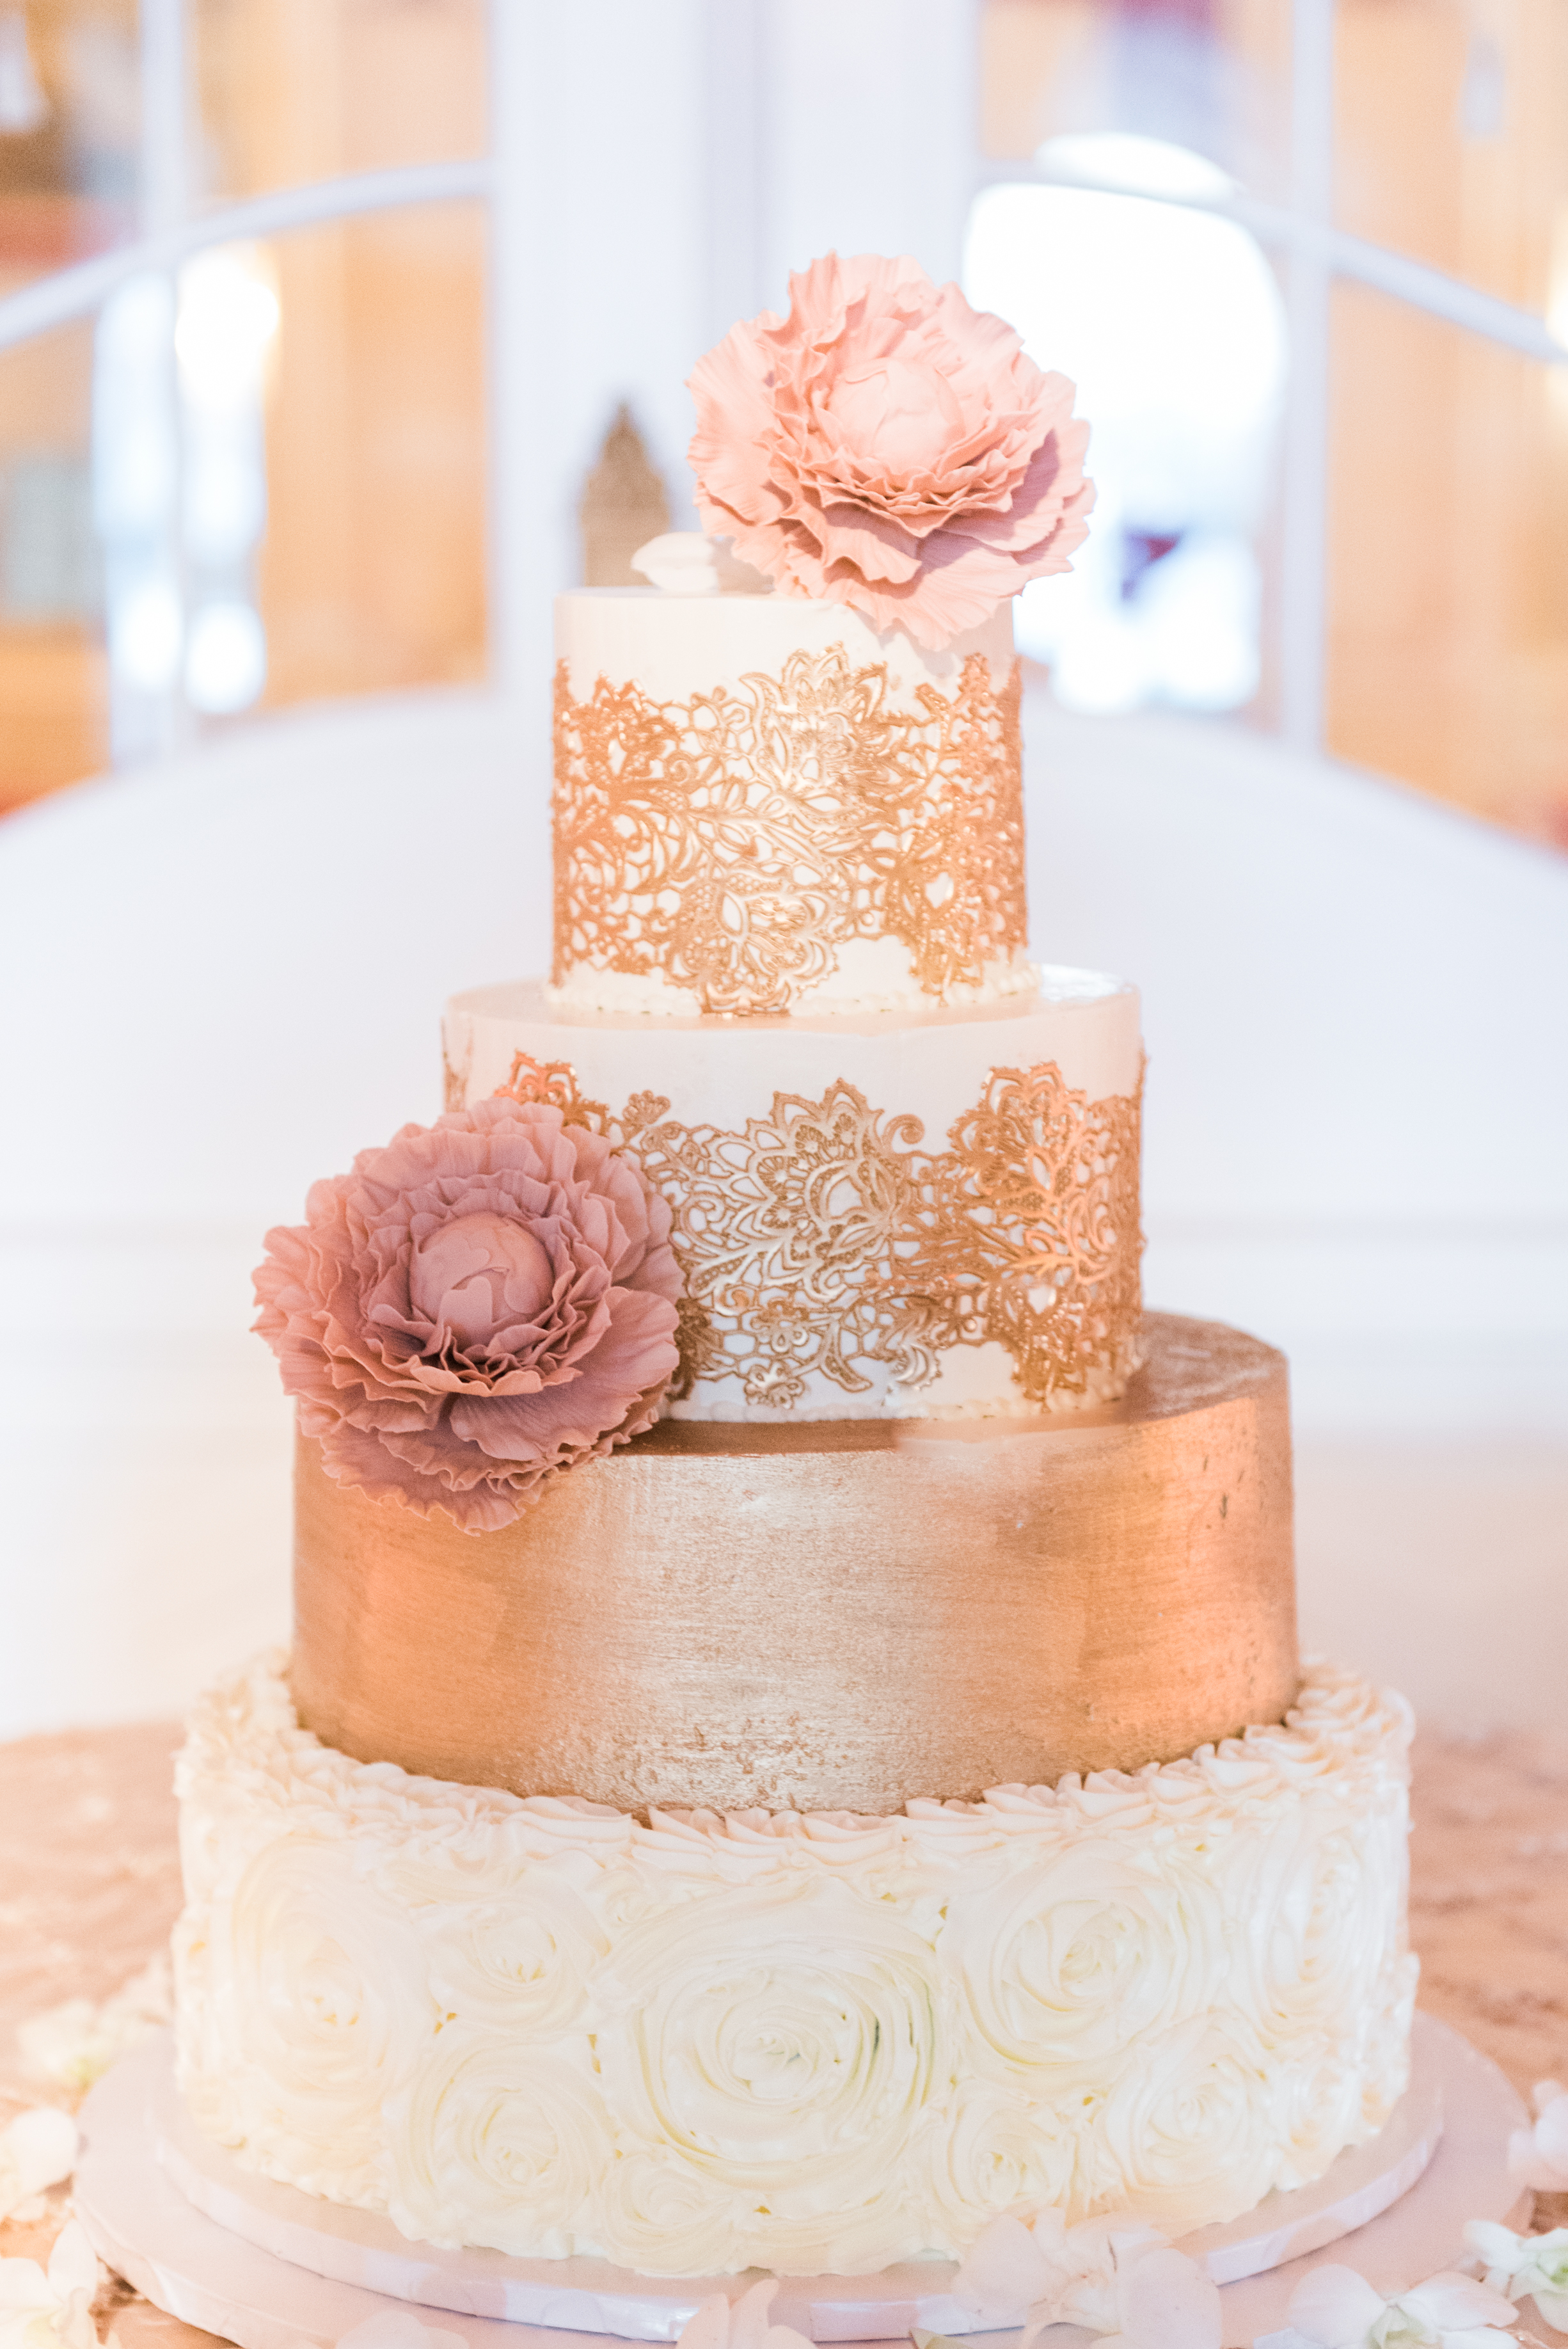 Gold and White Wedding Cake - Flagler Museum Palm Beach Wedding Ceremony - The Overwhelmed Bride Wedding Blog